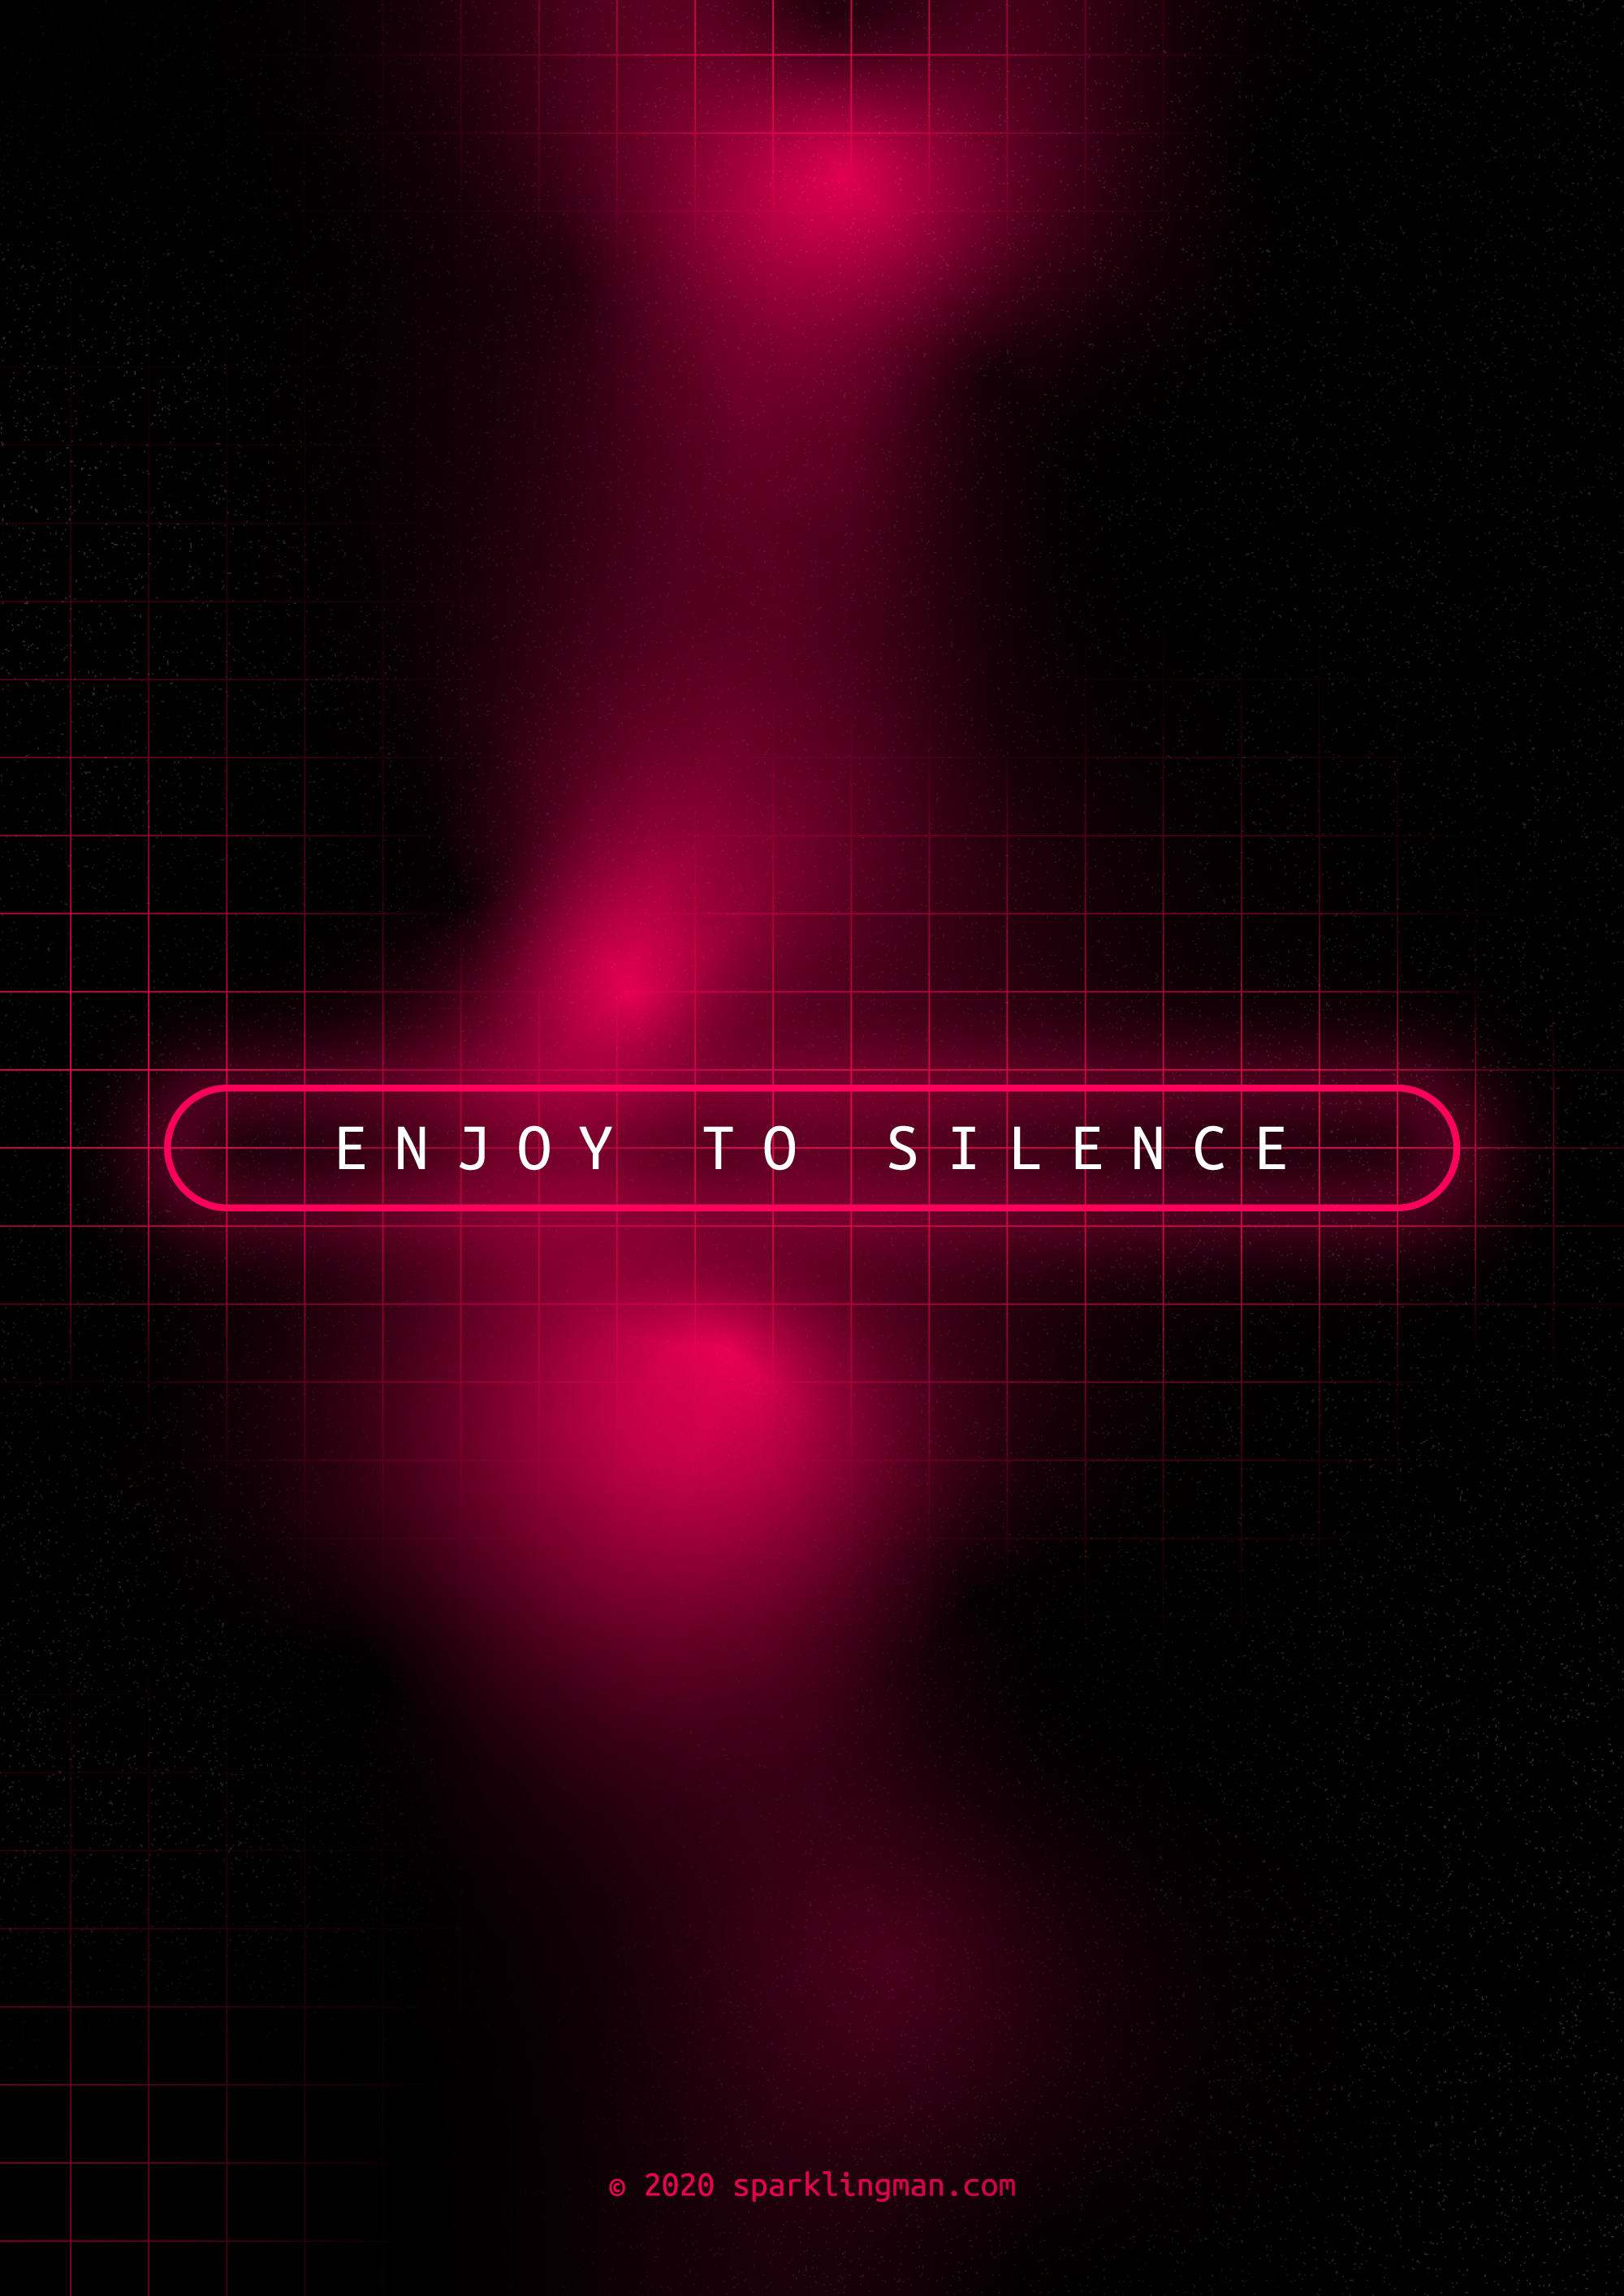 Enjoy to silence